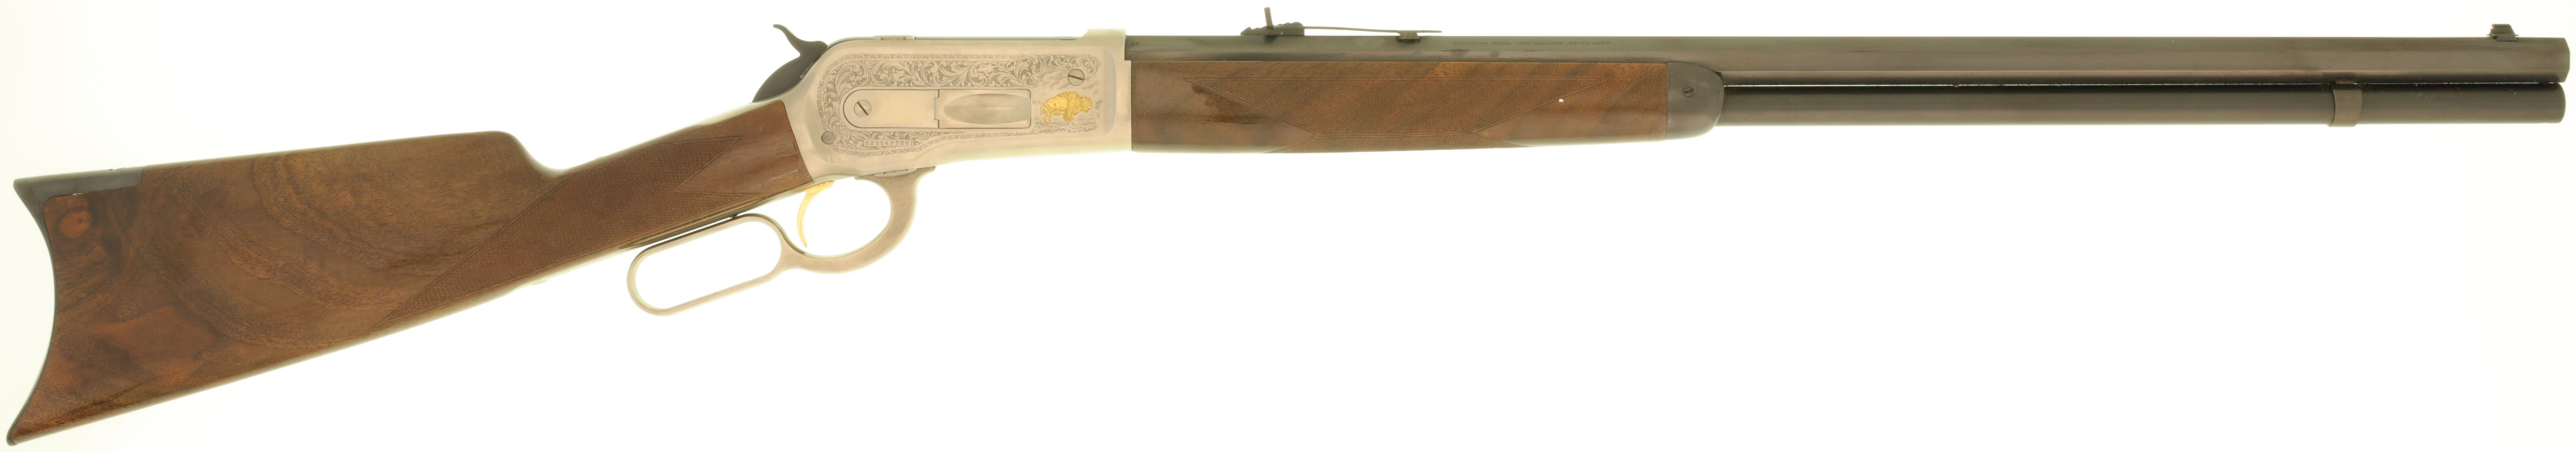 55th Swiss Gun Auction - Timed Auction